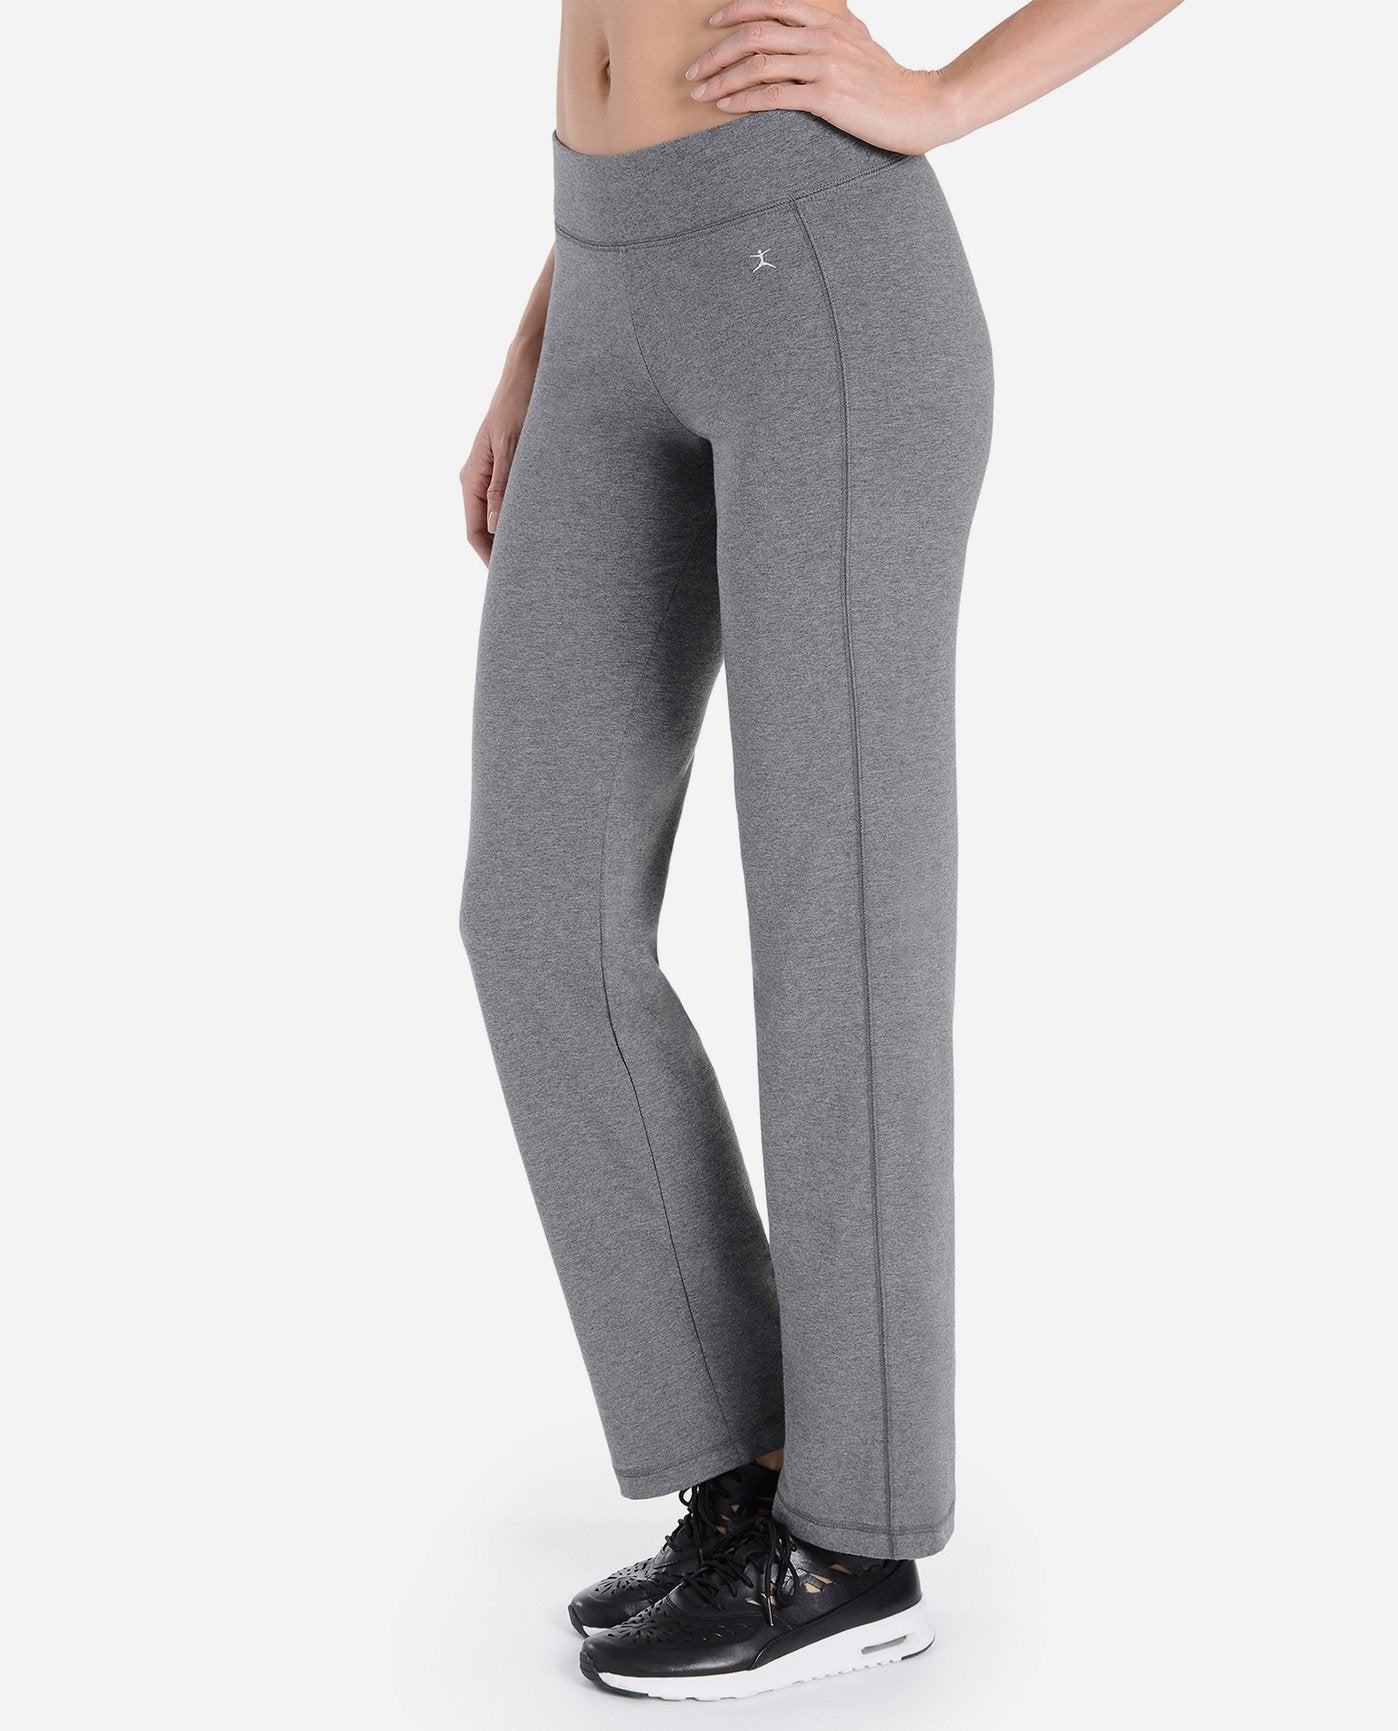 Danskin Women's Athleisure Sleek Fit Crop Yoga Pant